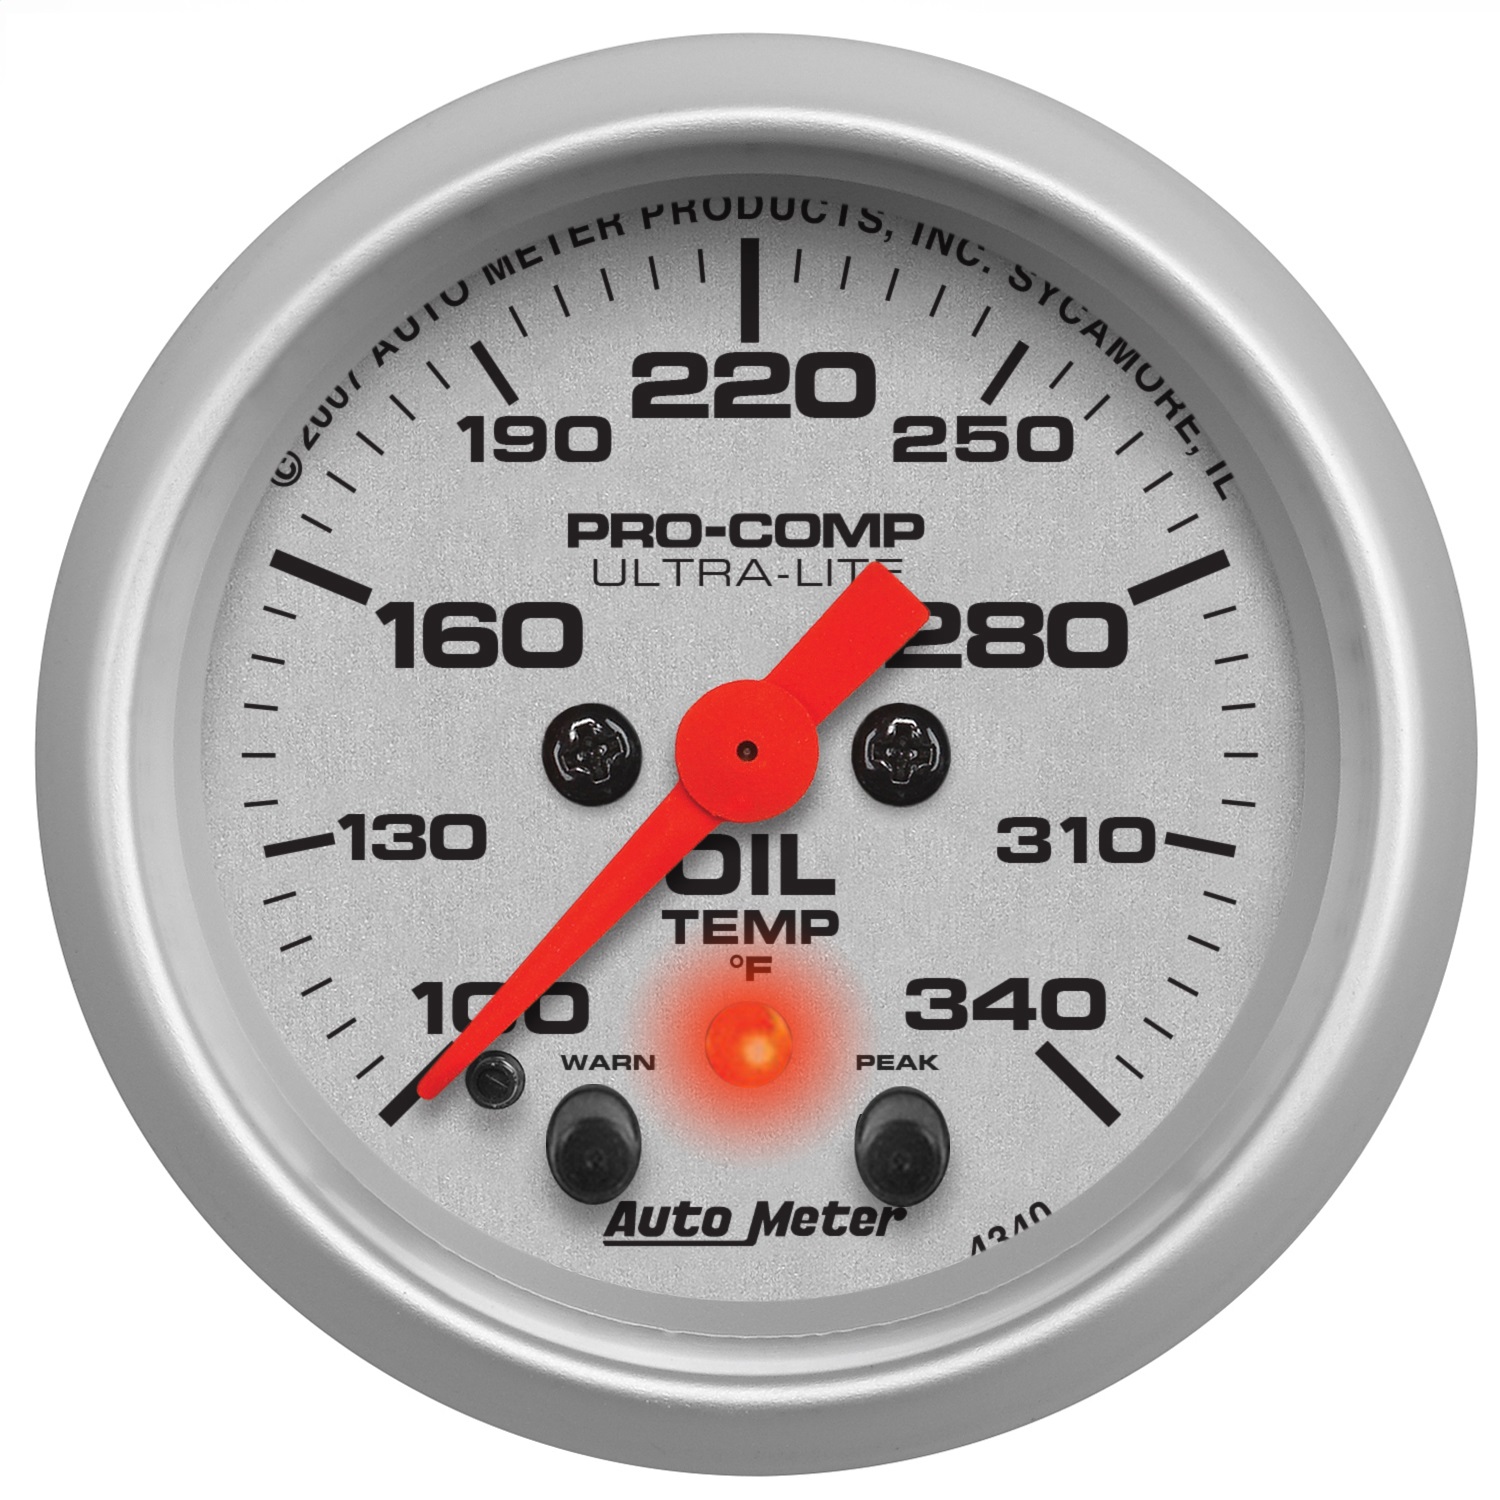 Auto Meter Auto Meter 4340 Ultra-Lite; Electric Oil Temperature Gauge